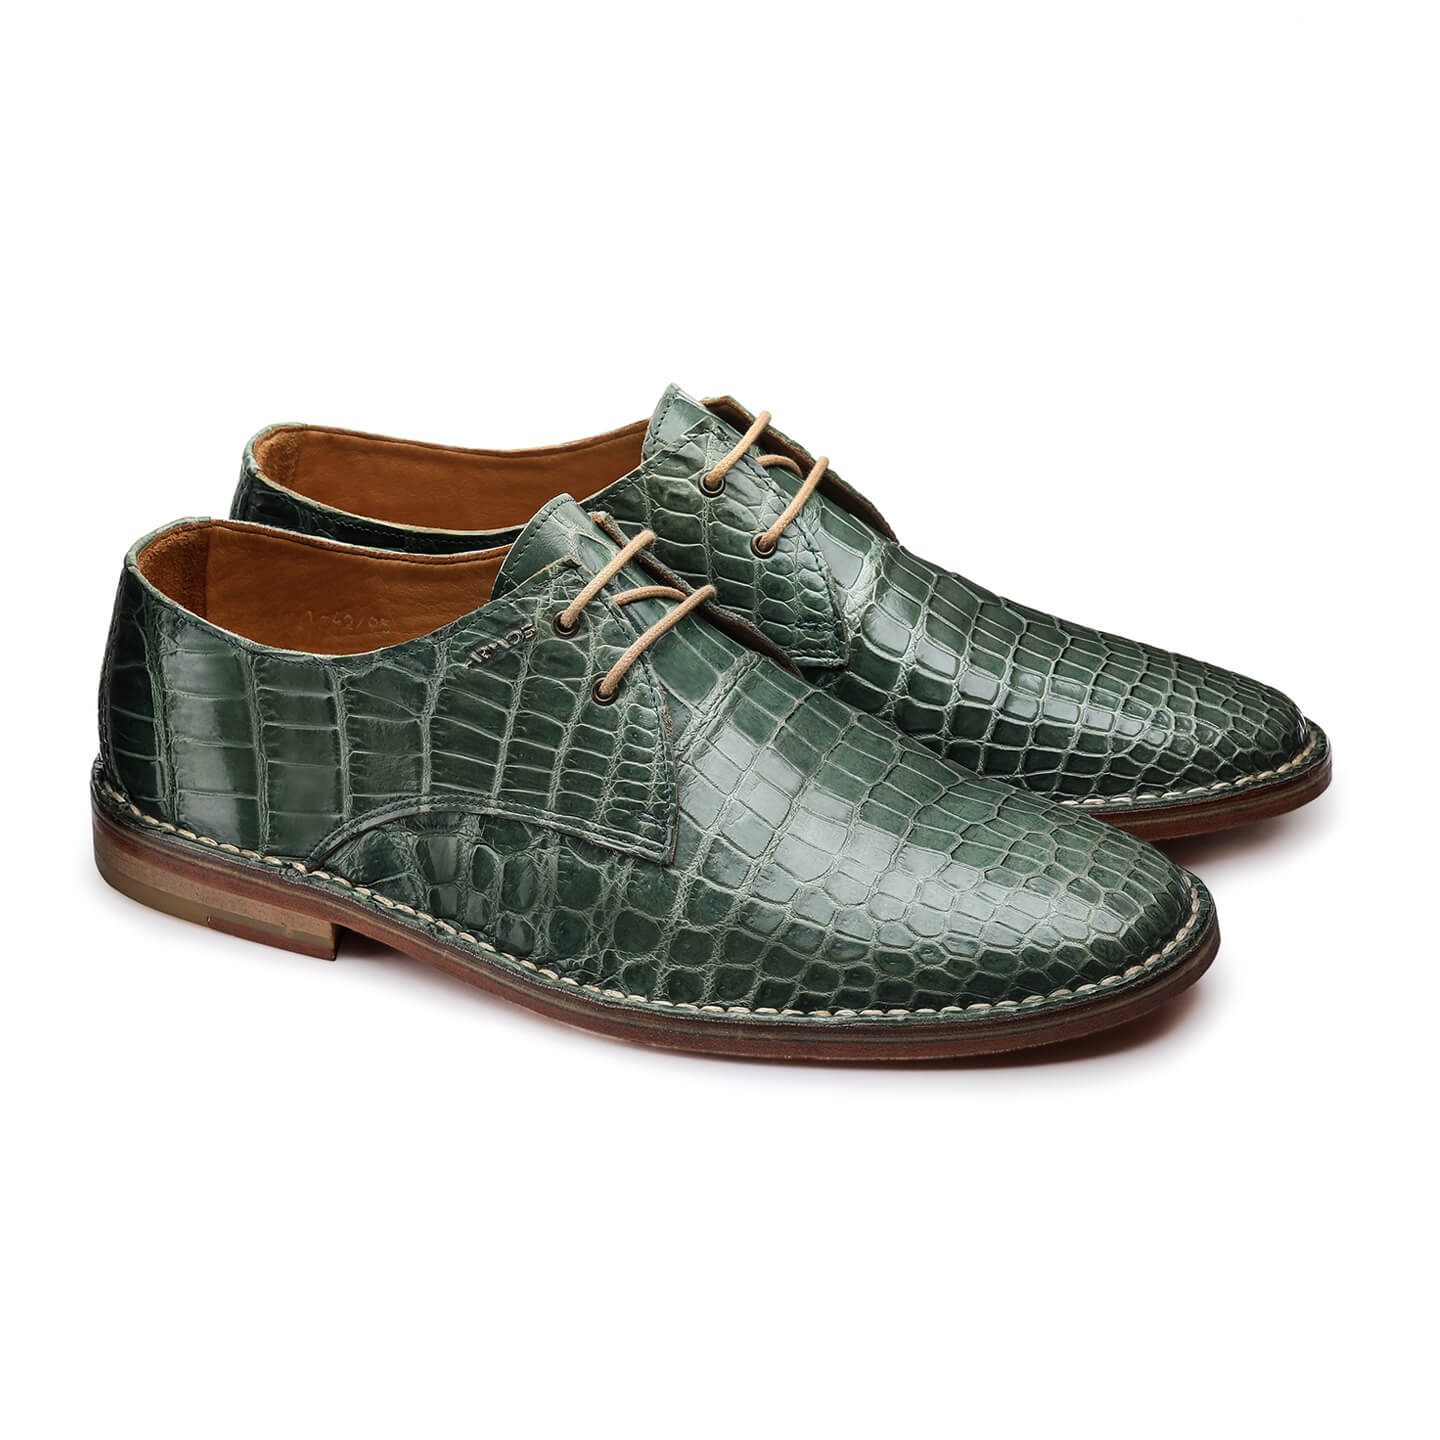 Green crocodile shoes